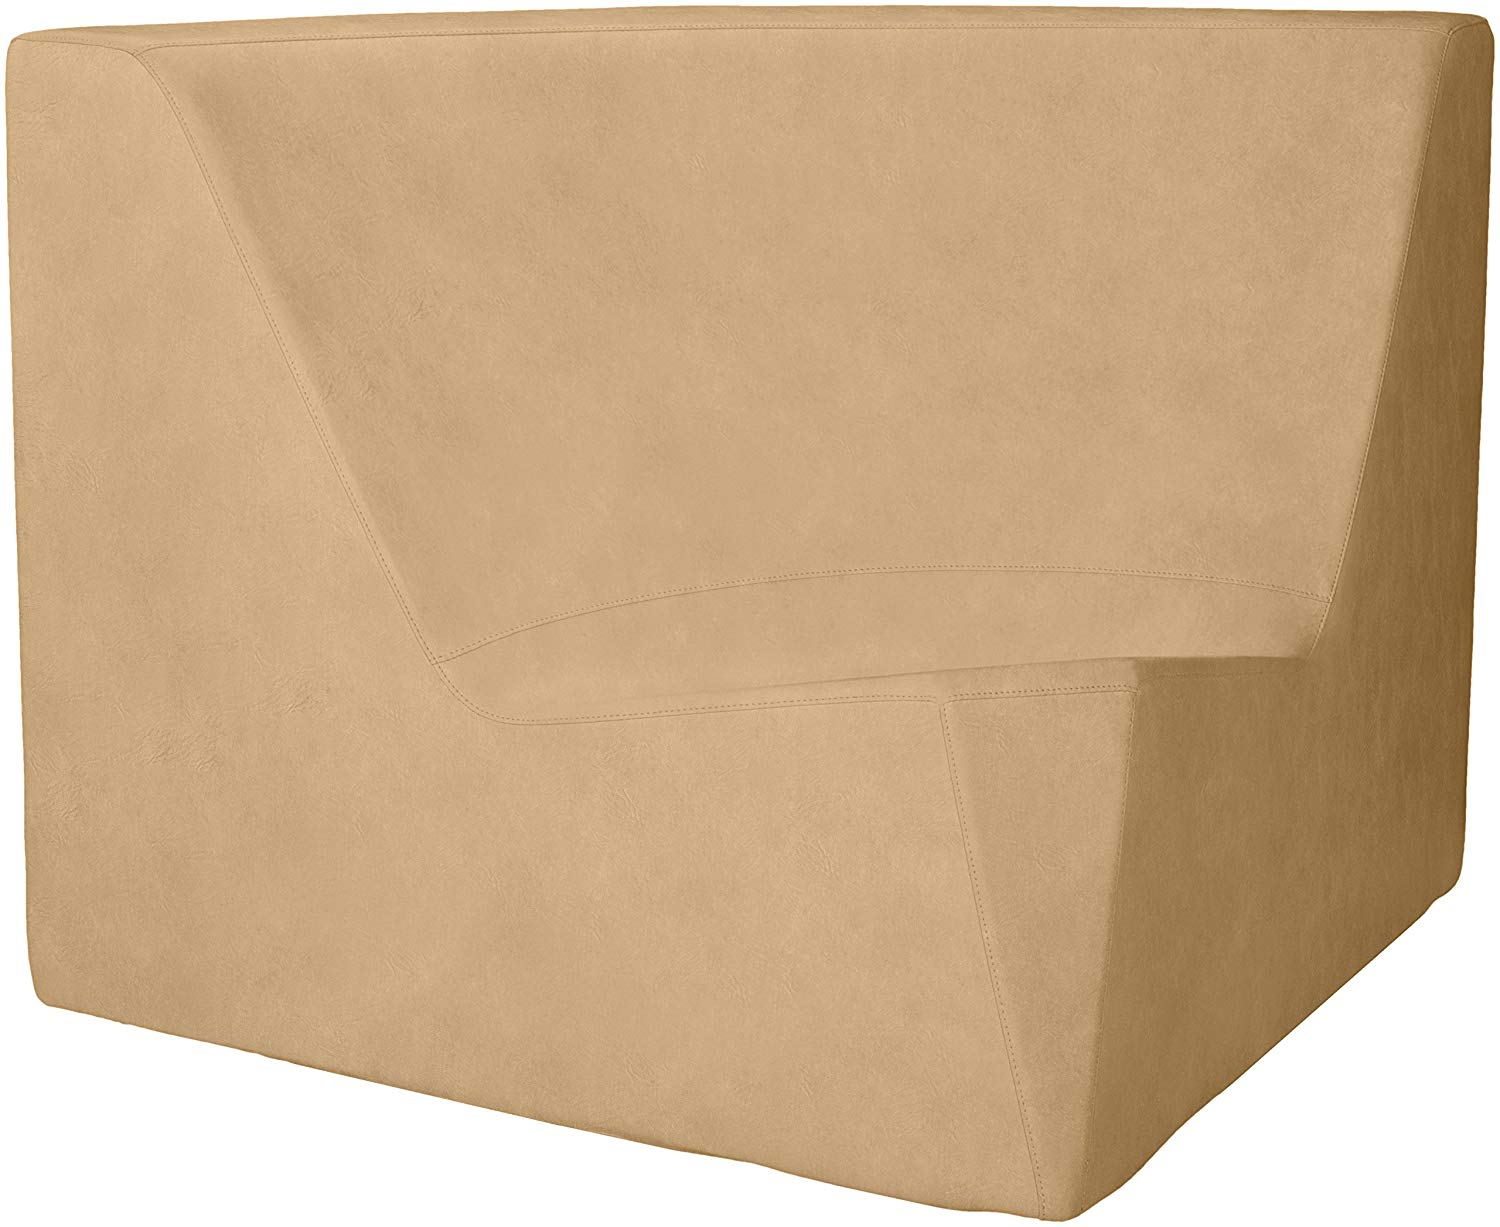 La Fete Design Furniture Goal Corner Module at MetropolitanDecor.com